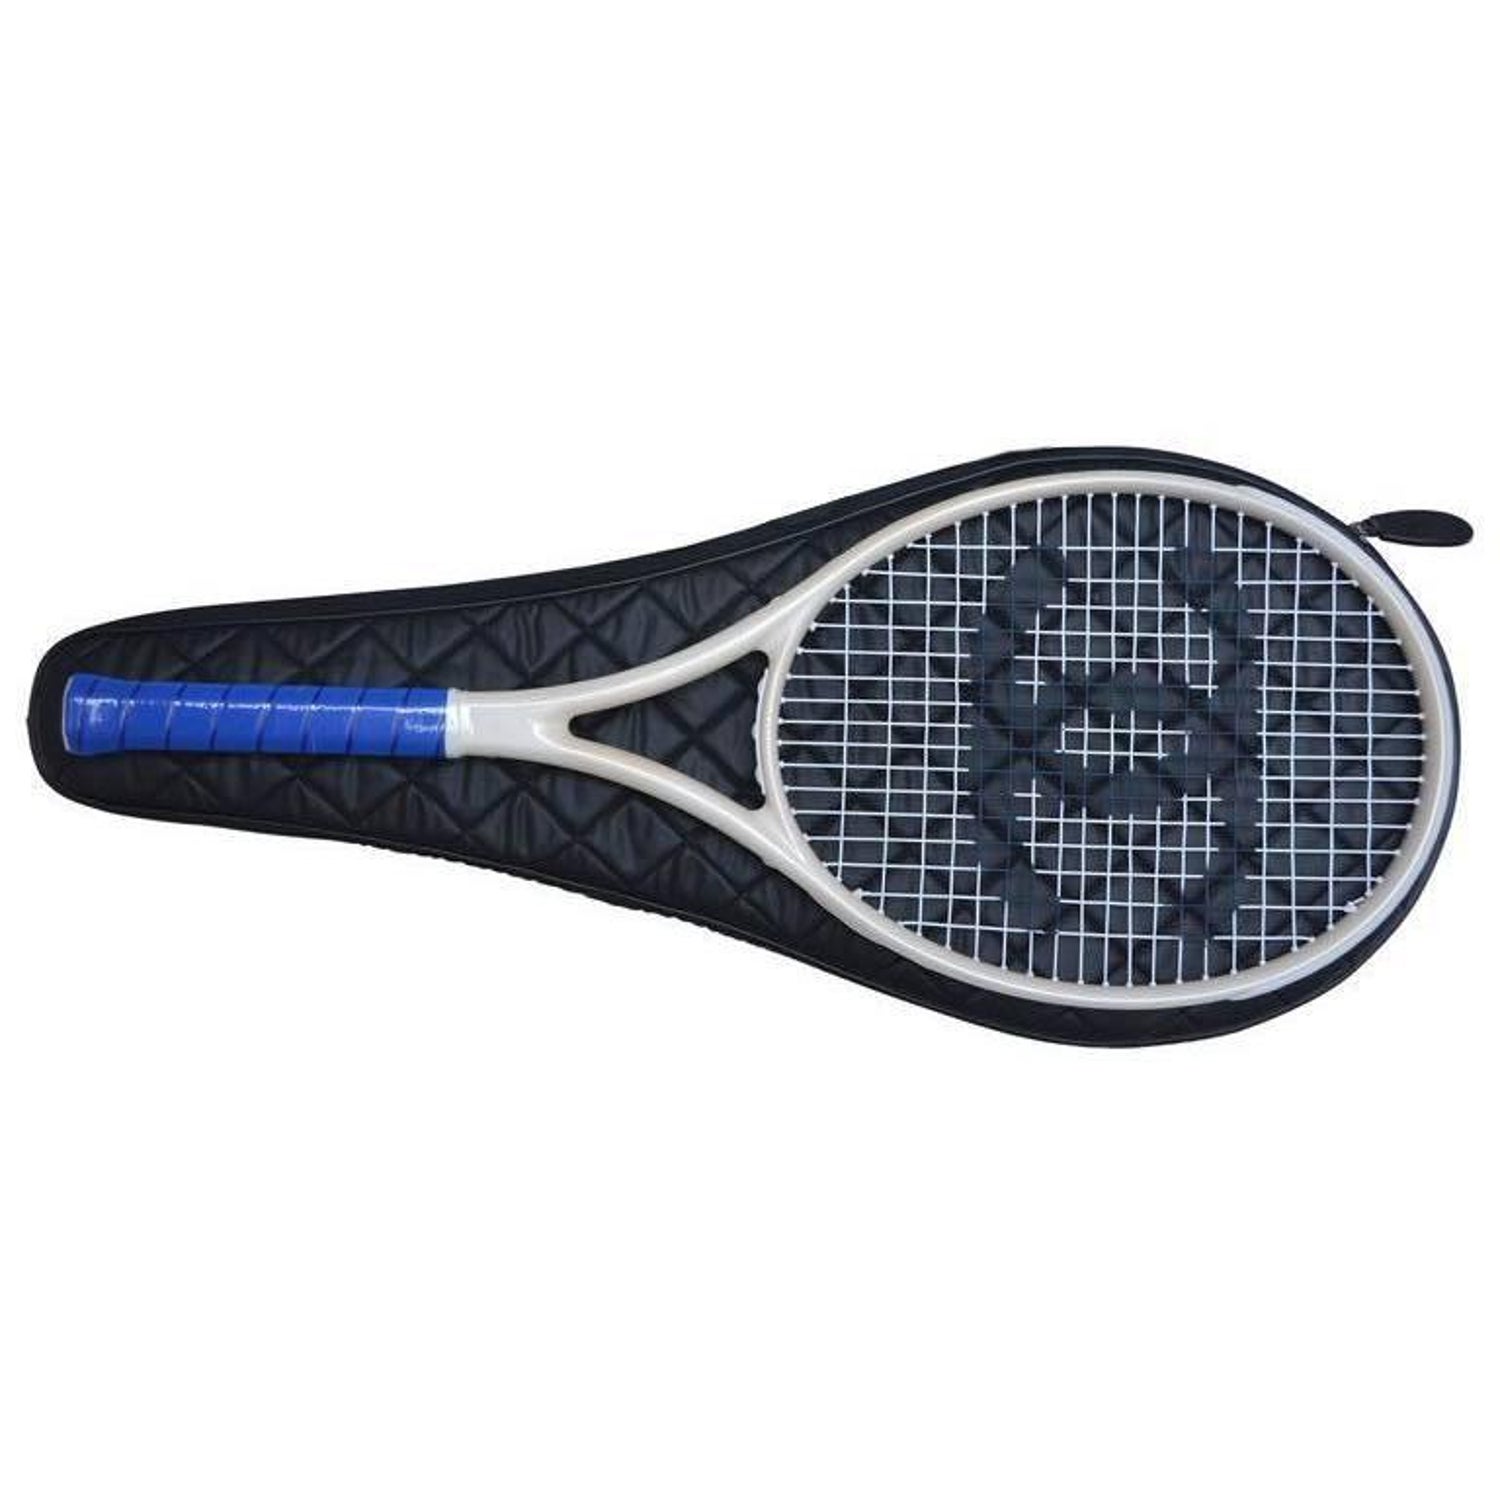 Chanel Tennis Racket - For Sale on 1stDibs | chanel tennis racket price, chanel  tennis racquet, chanel tennis racket set